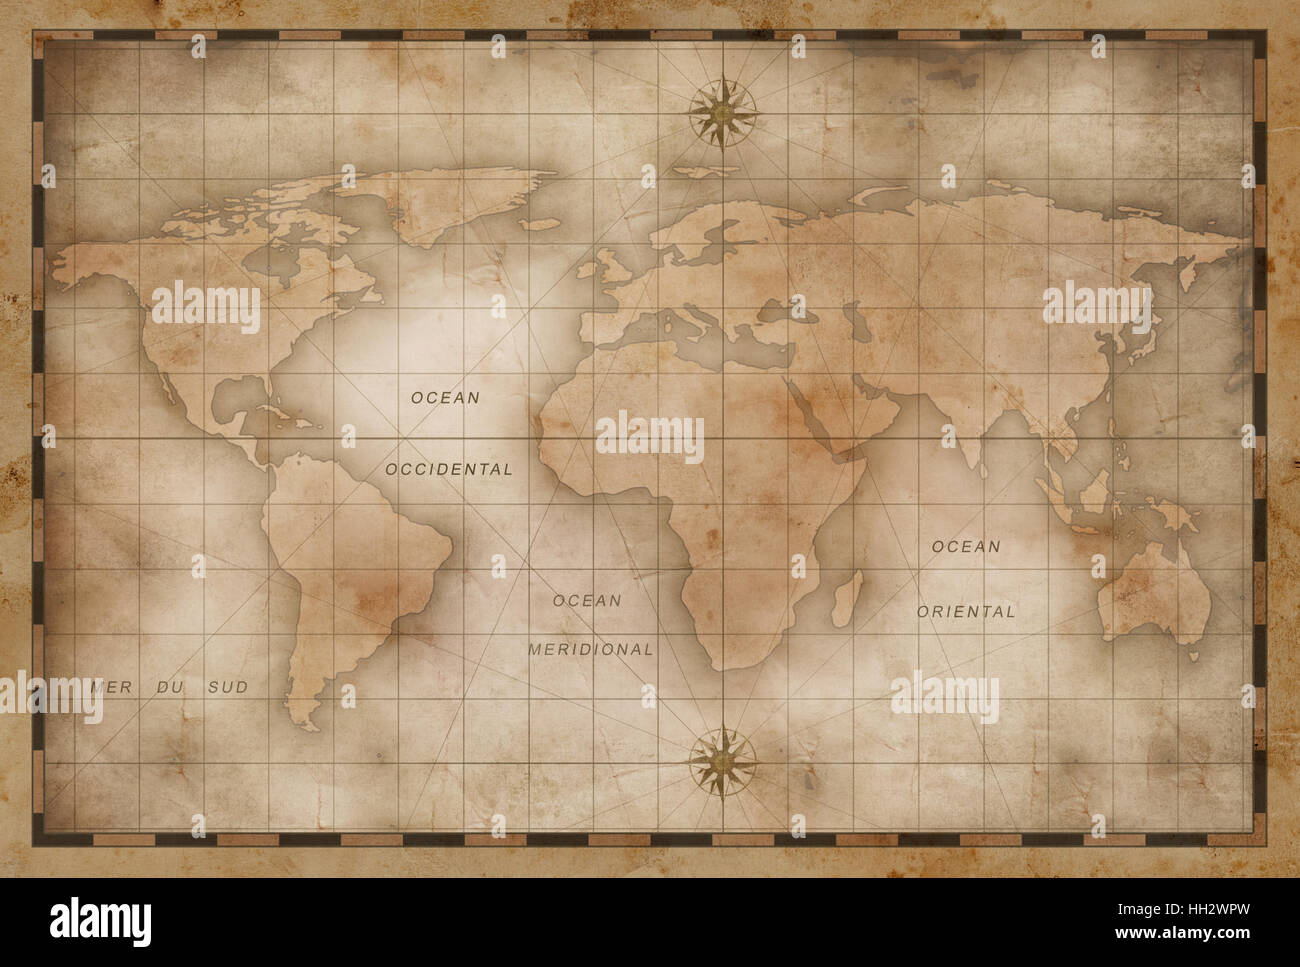 aged or old world map stylization Stock Photo